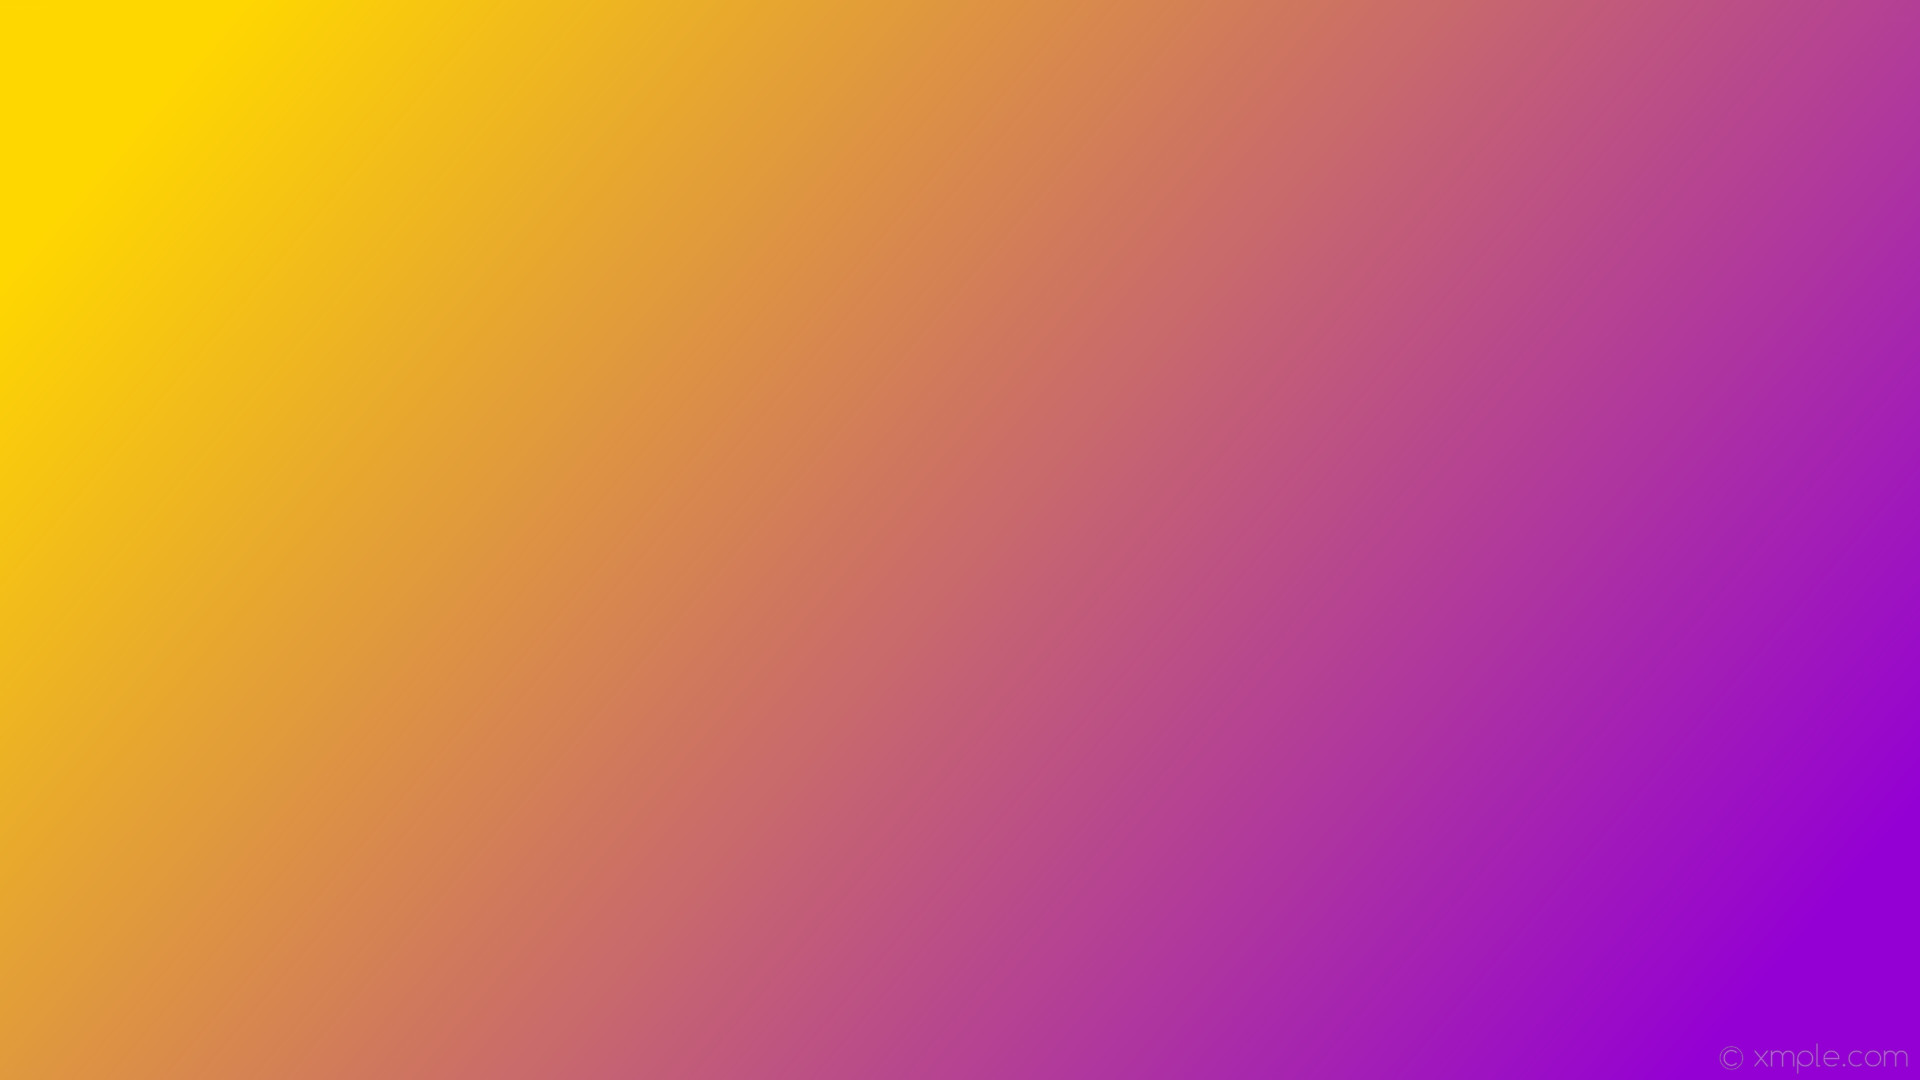 1920x1080 wallpaper yellow gradient linear purple gold dark violet #ffd700 #9400d3  165Â°